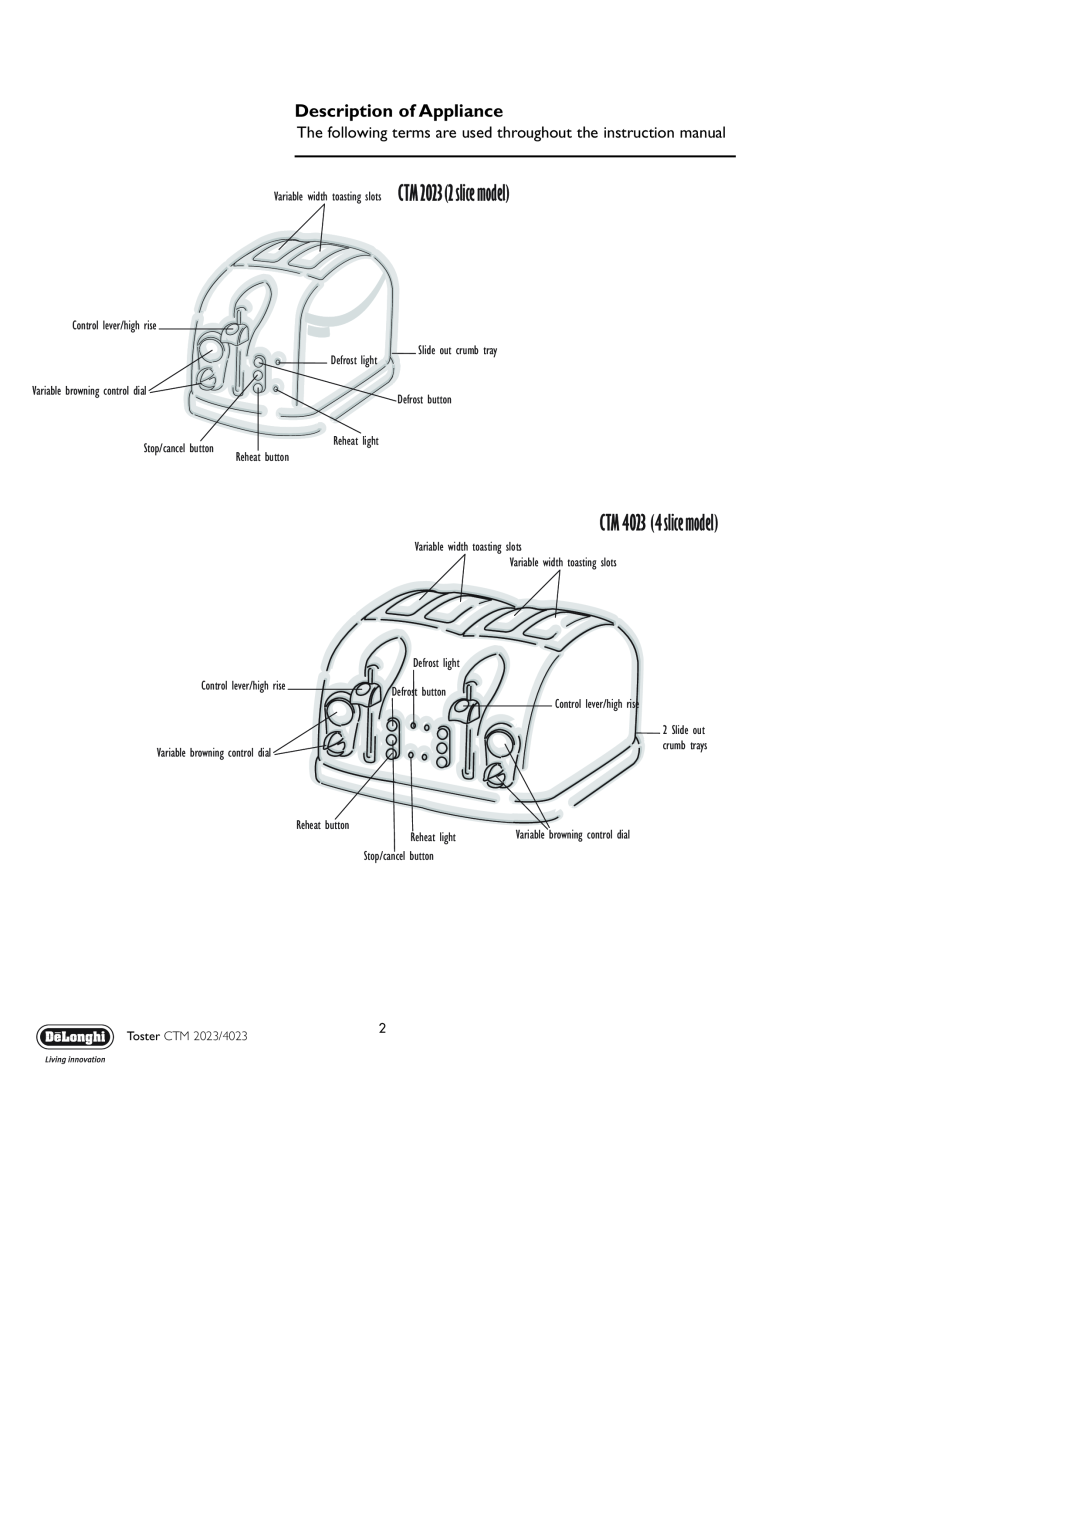 DeLonghi CTM 2023 manual Description of Appliance, CTM 4023 4 slice model 